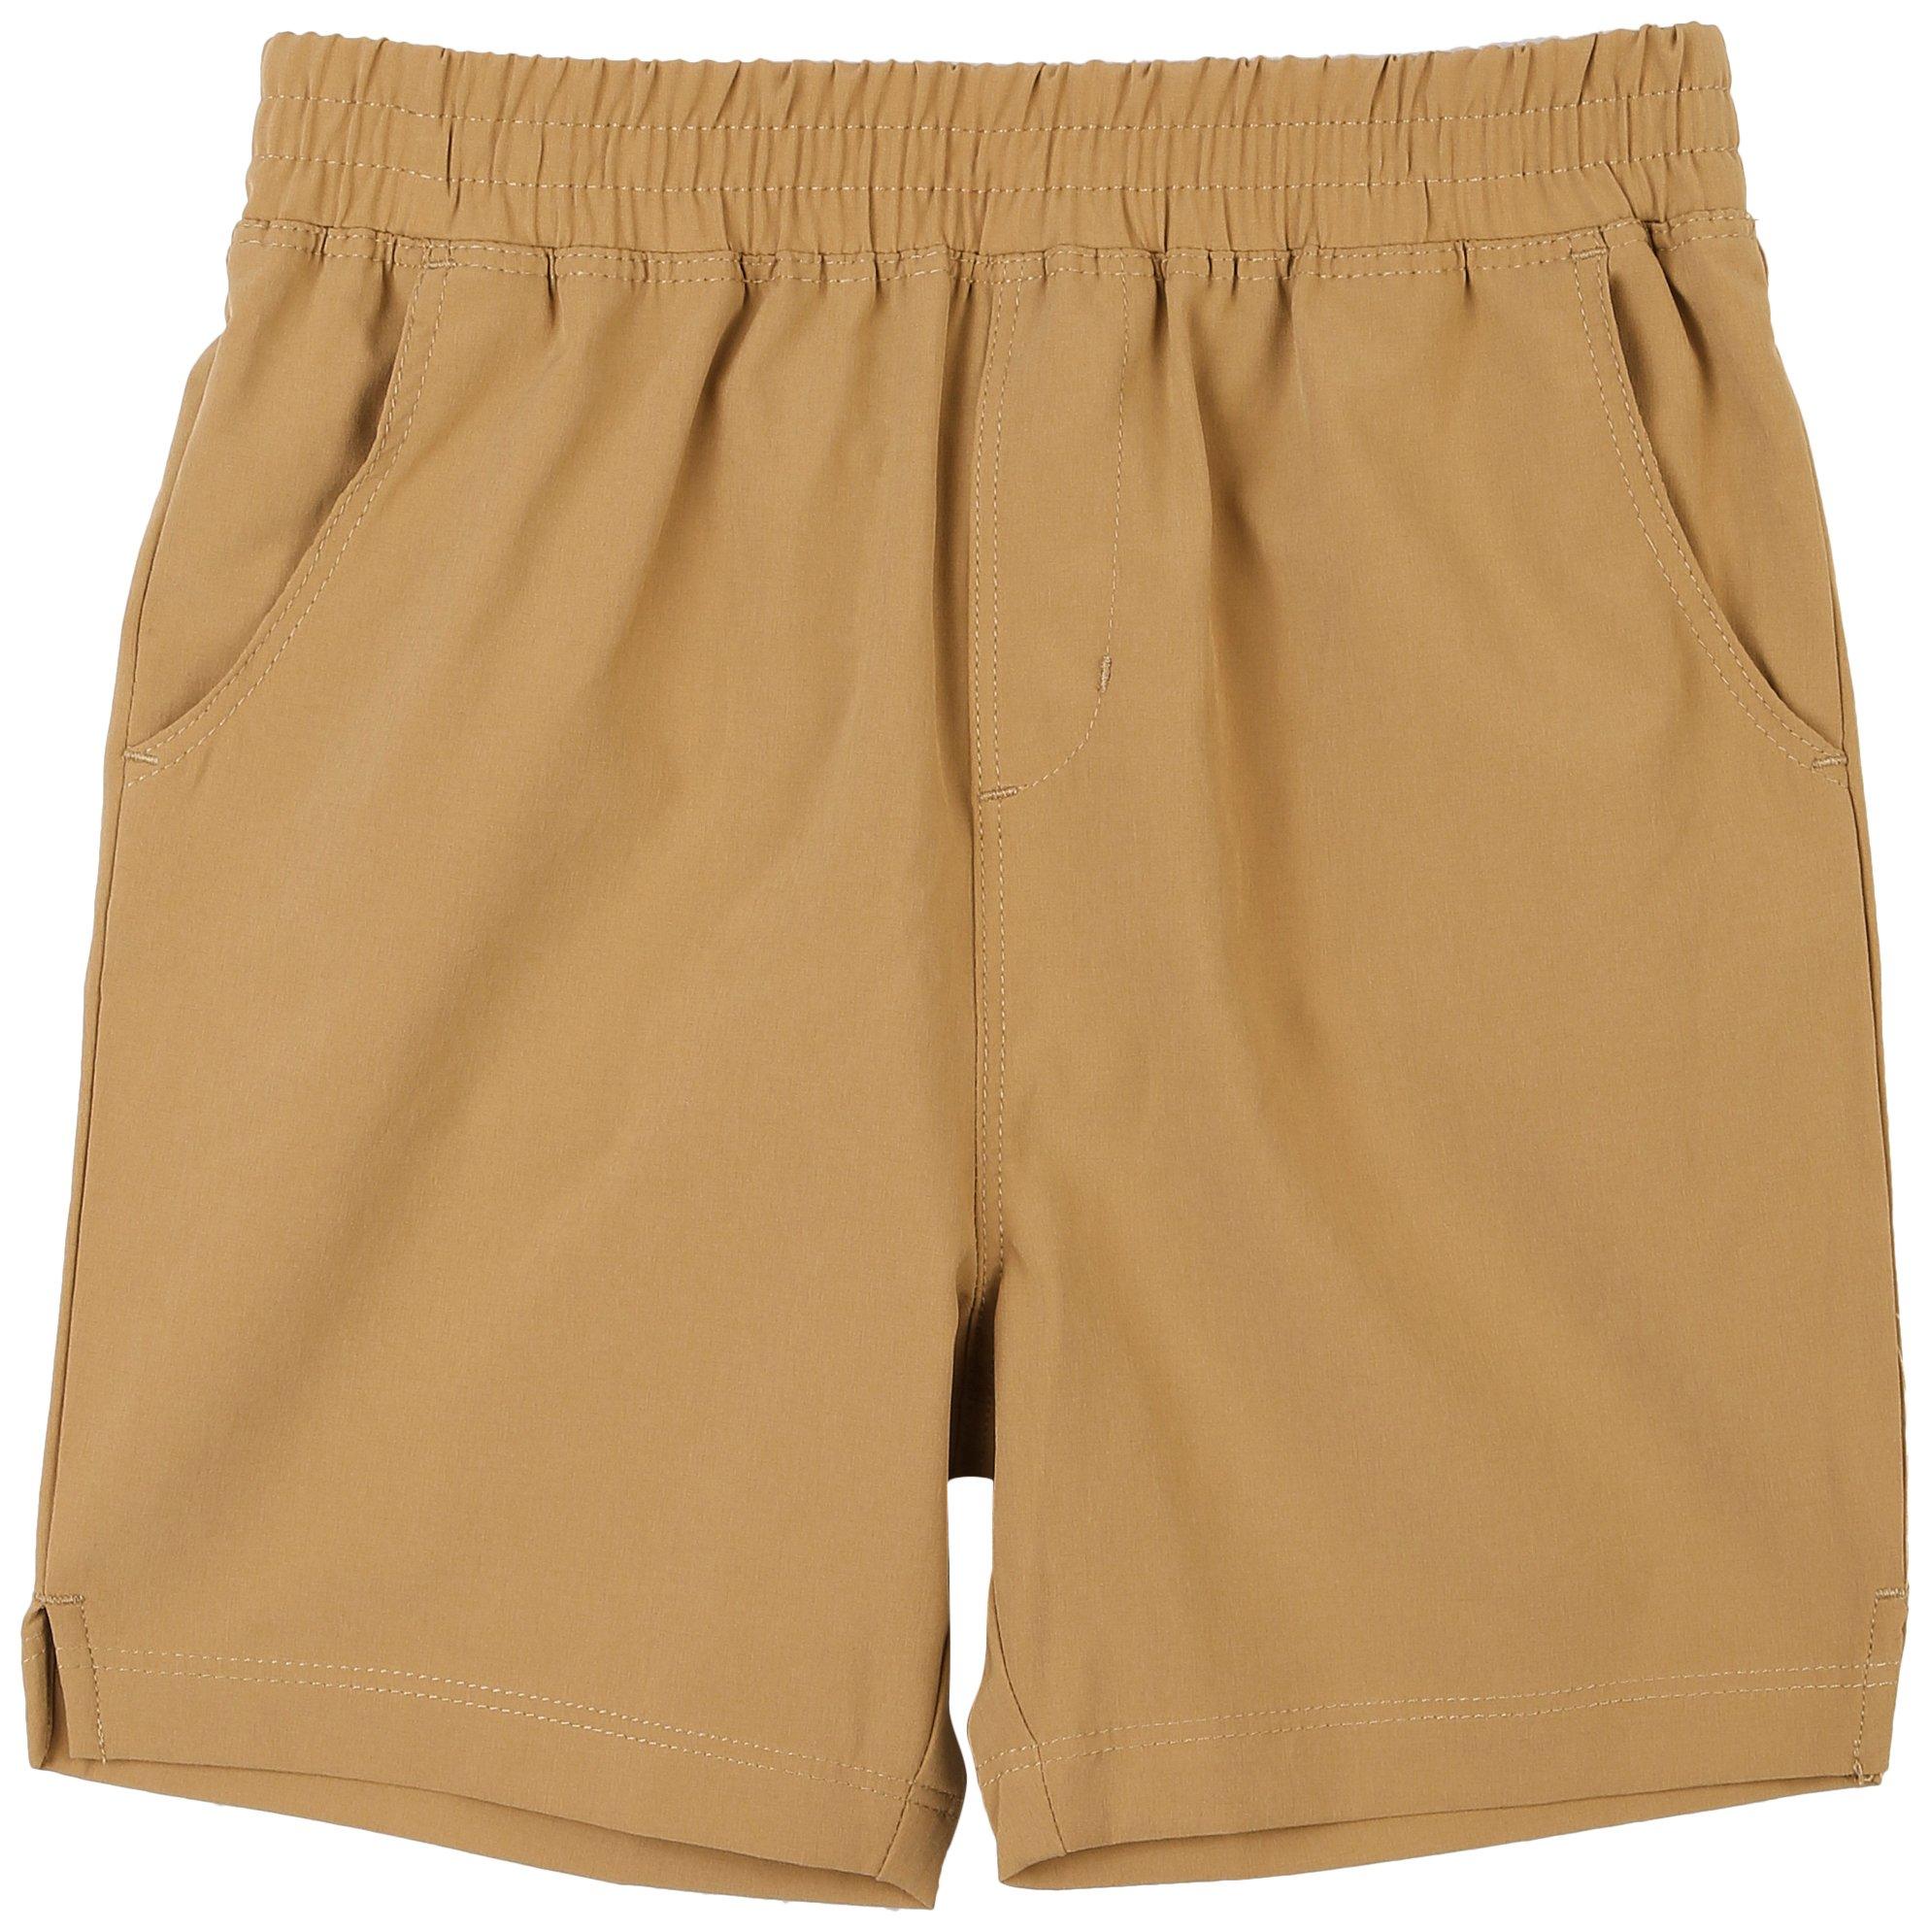 https://images.beallsflorida.com/i/beallsflorida/765-1831-0247-72-yyy/*Toddler-Boys-Pull-On-Woven-Shorts*?$BR_thumbnail$&fmt=auto&qlt=default